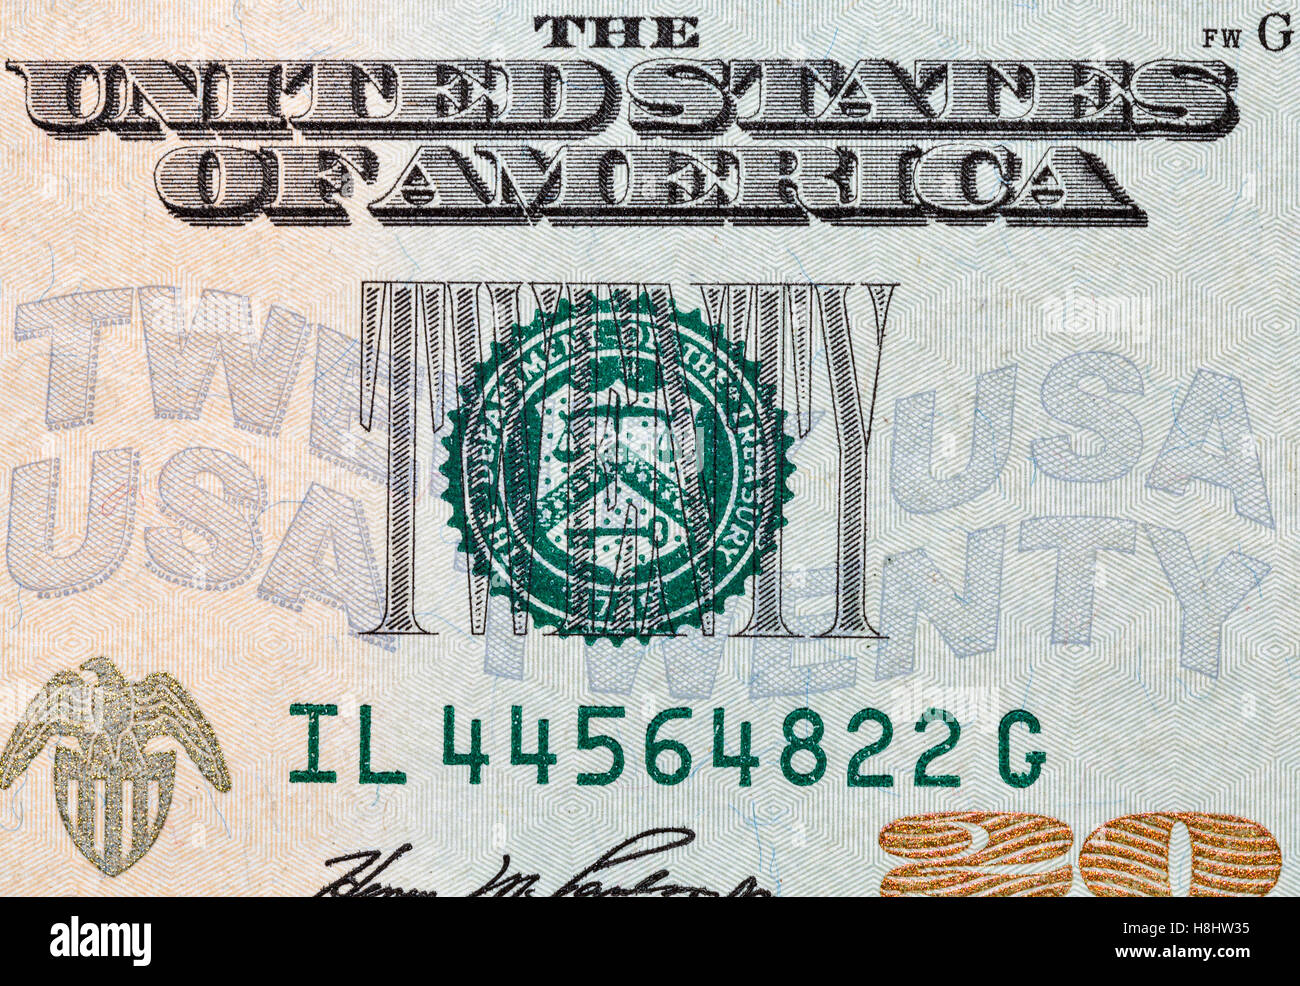 Stamp of the Department of The Treasury on US twenty dollars bill closeup macro Stock Photo